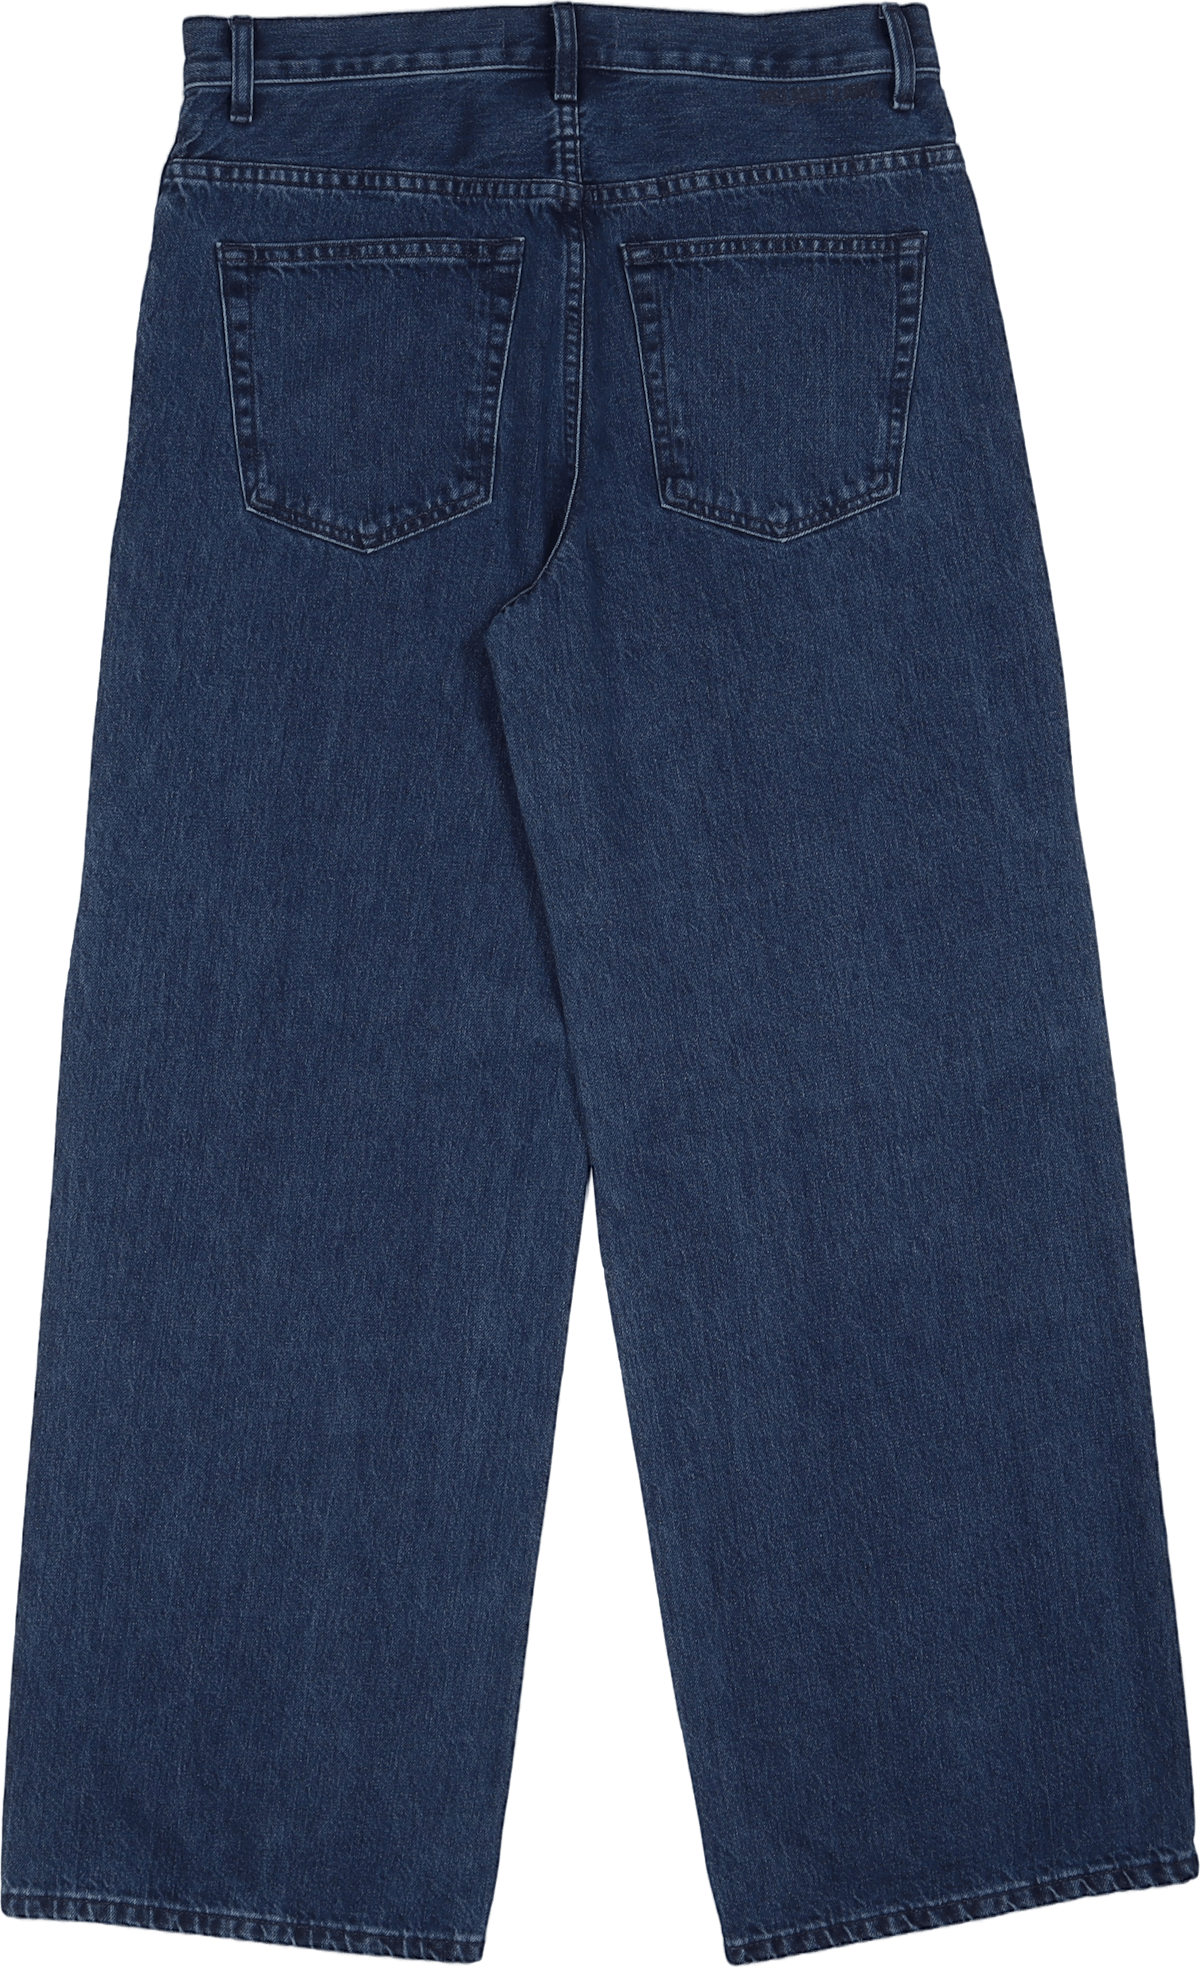 Zip Jeans.indigo Indigo